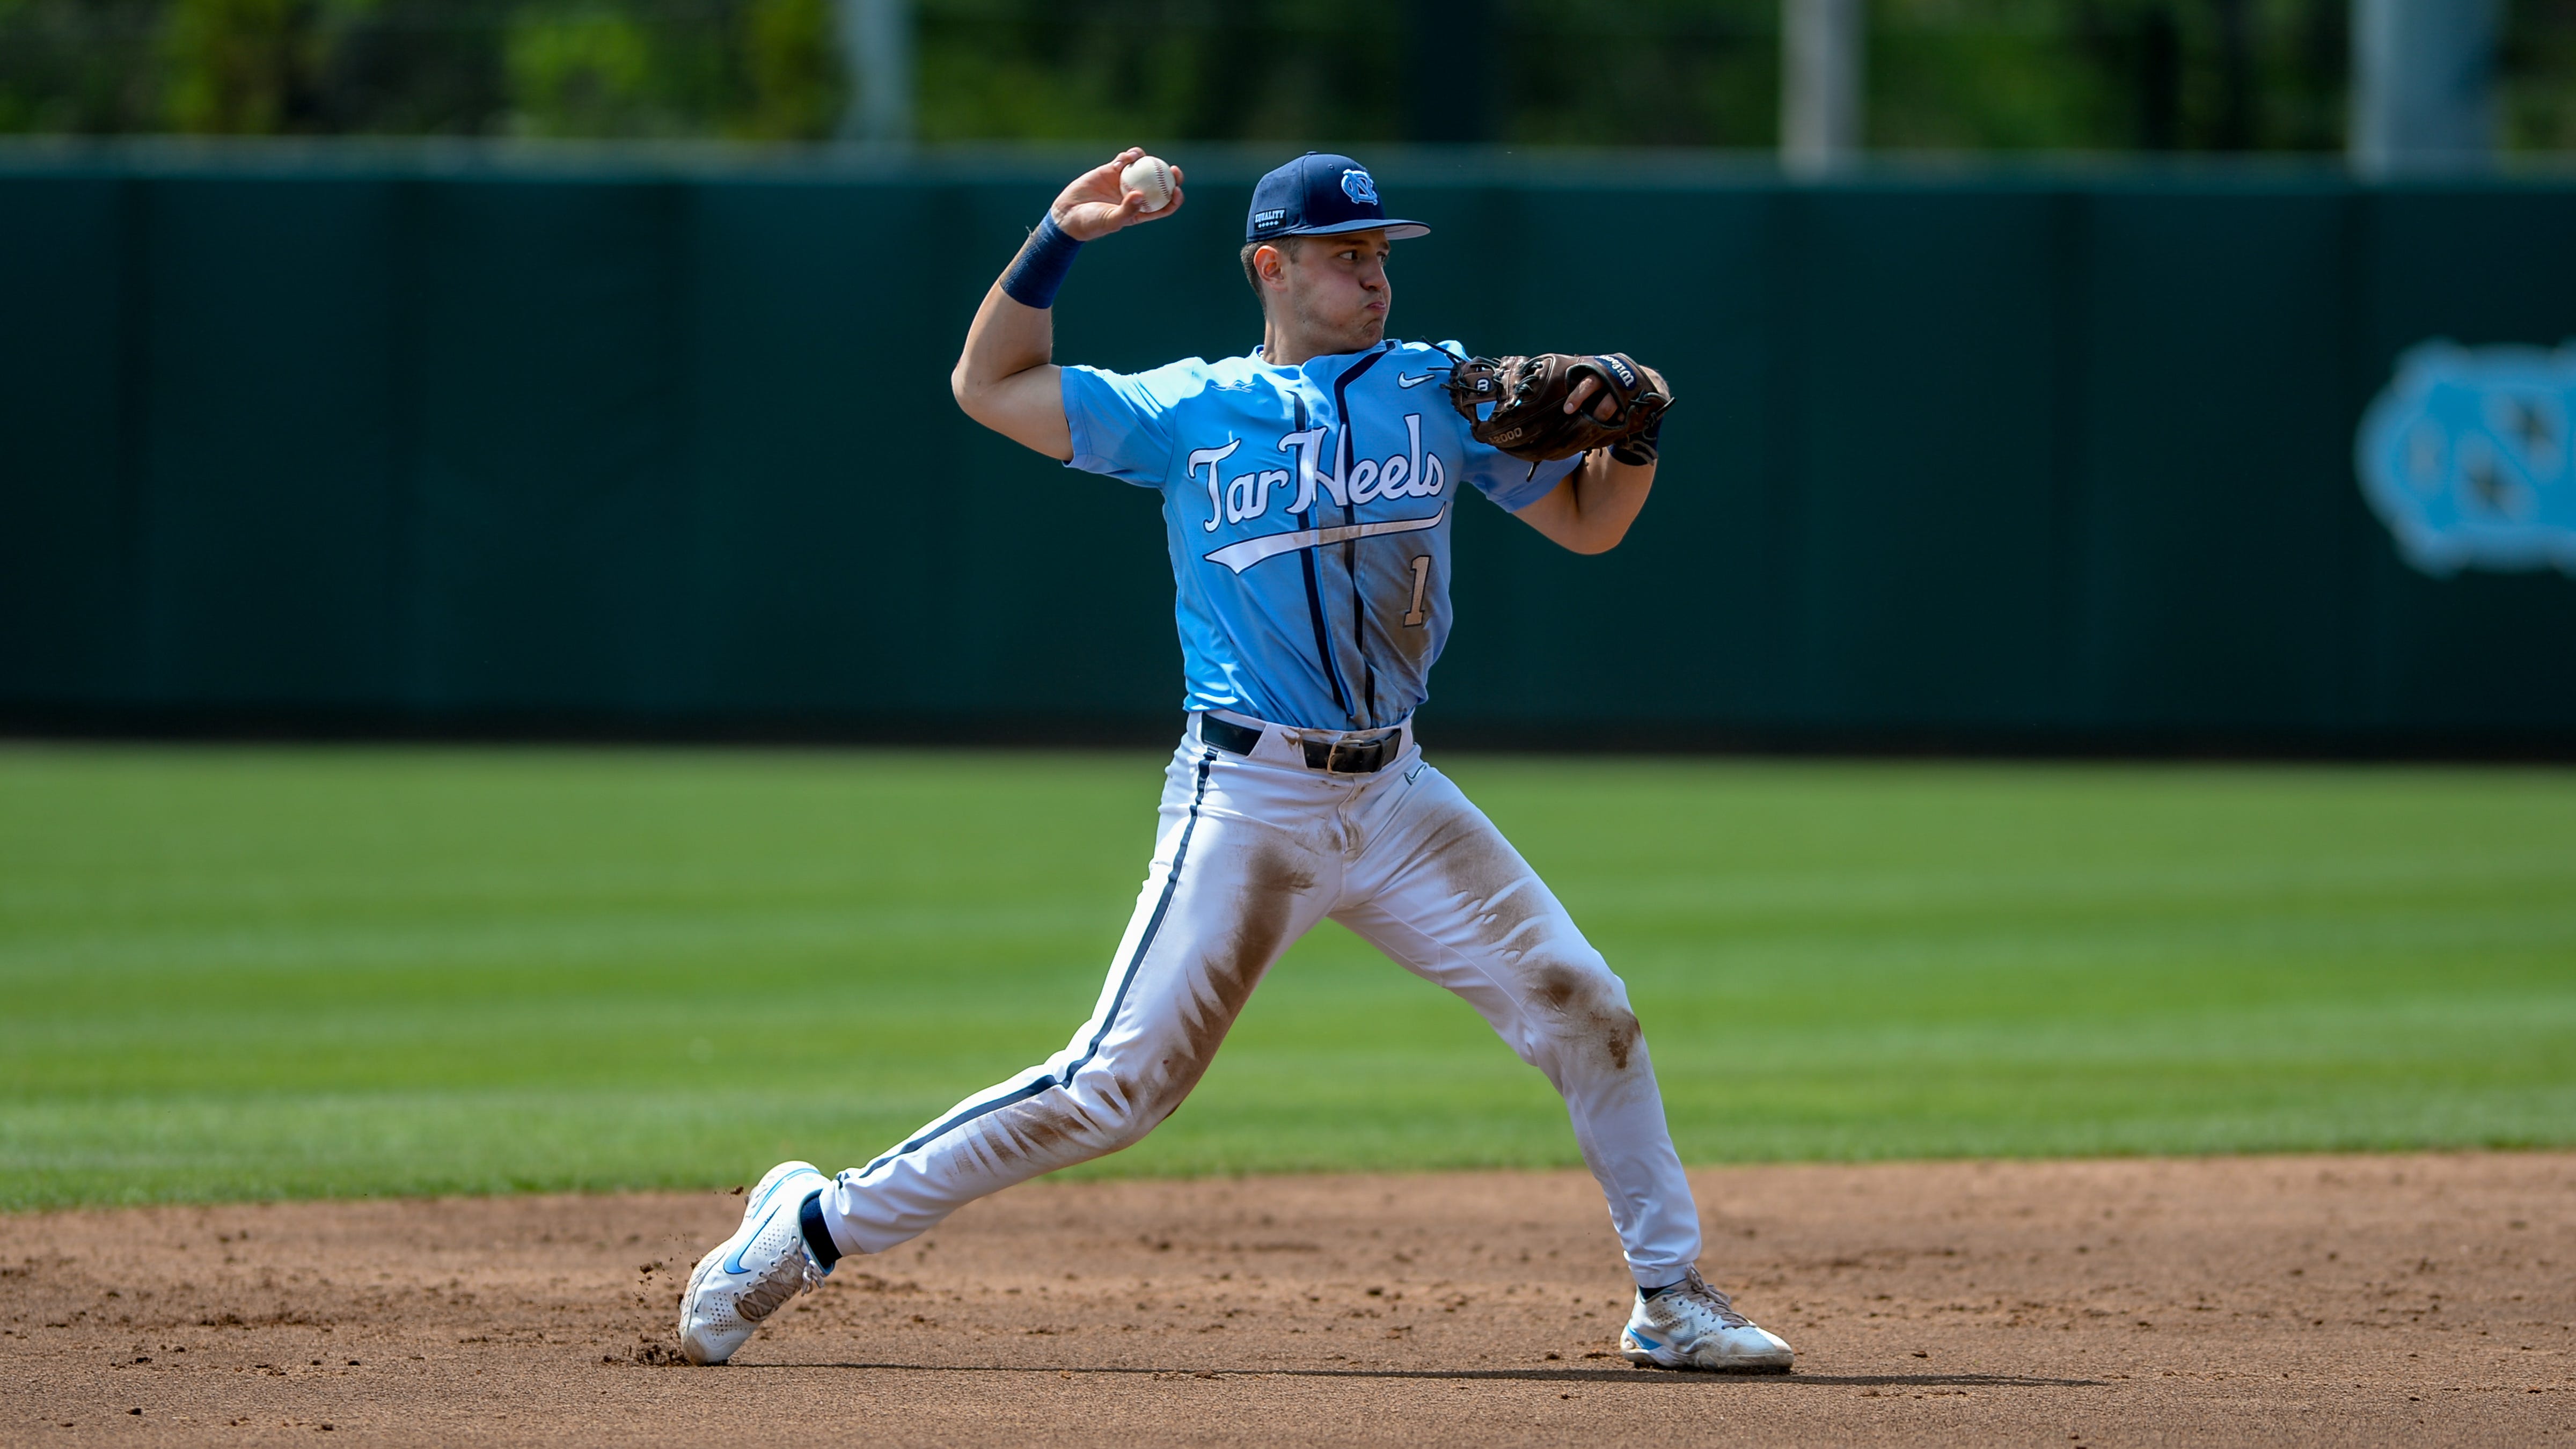 Danny Serretti: UNC baseball shortstop in photos